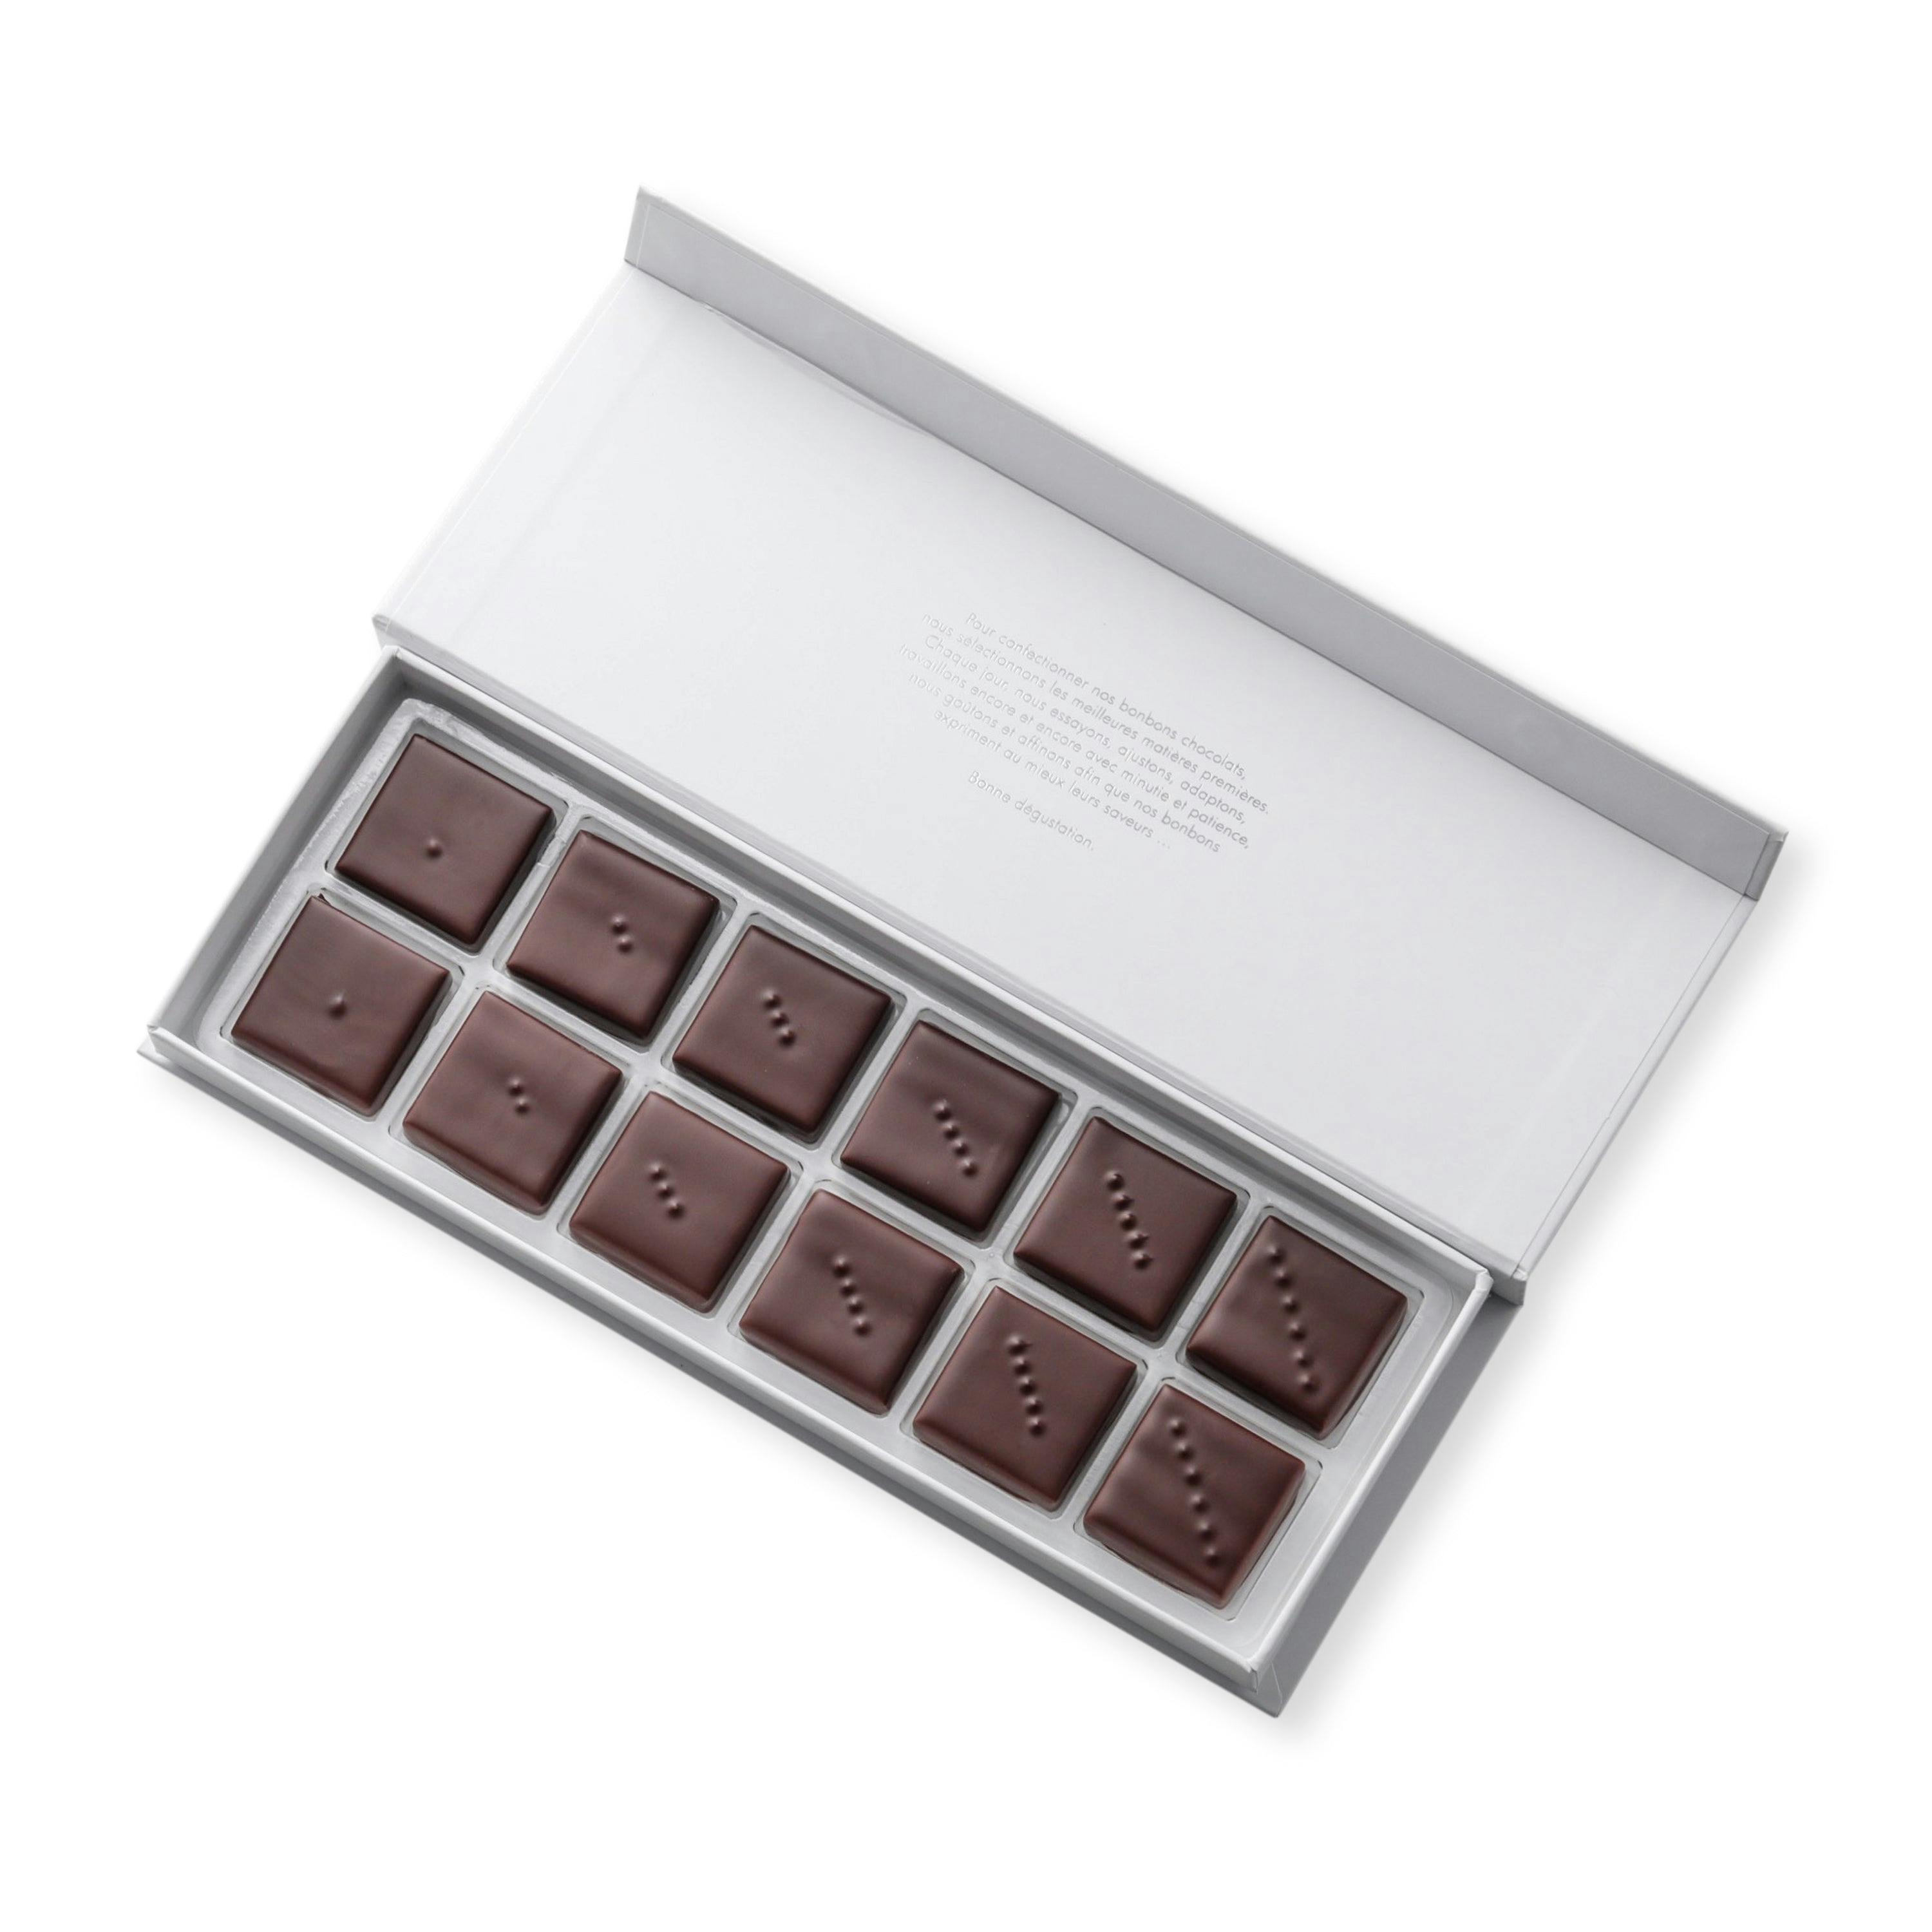 Coffret Ganache pures origines 12 chocolats - Vincent Vallée world champion chocolatier